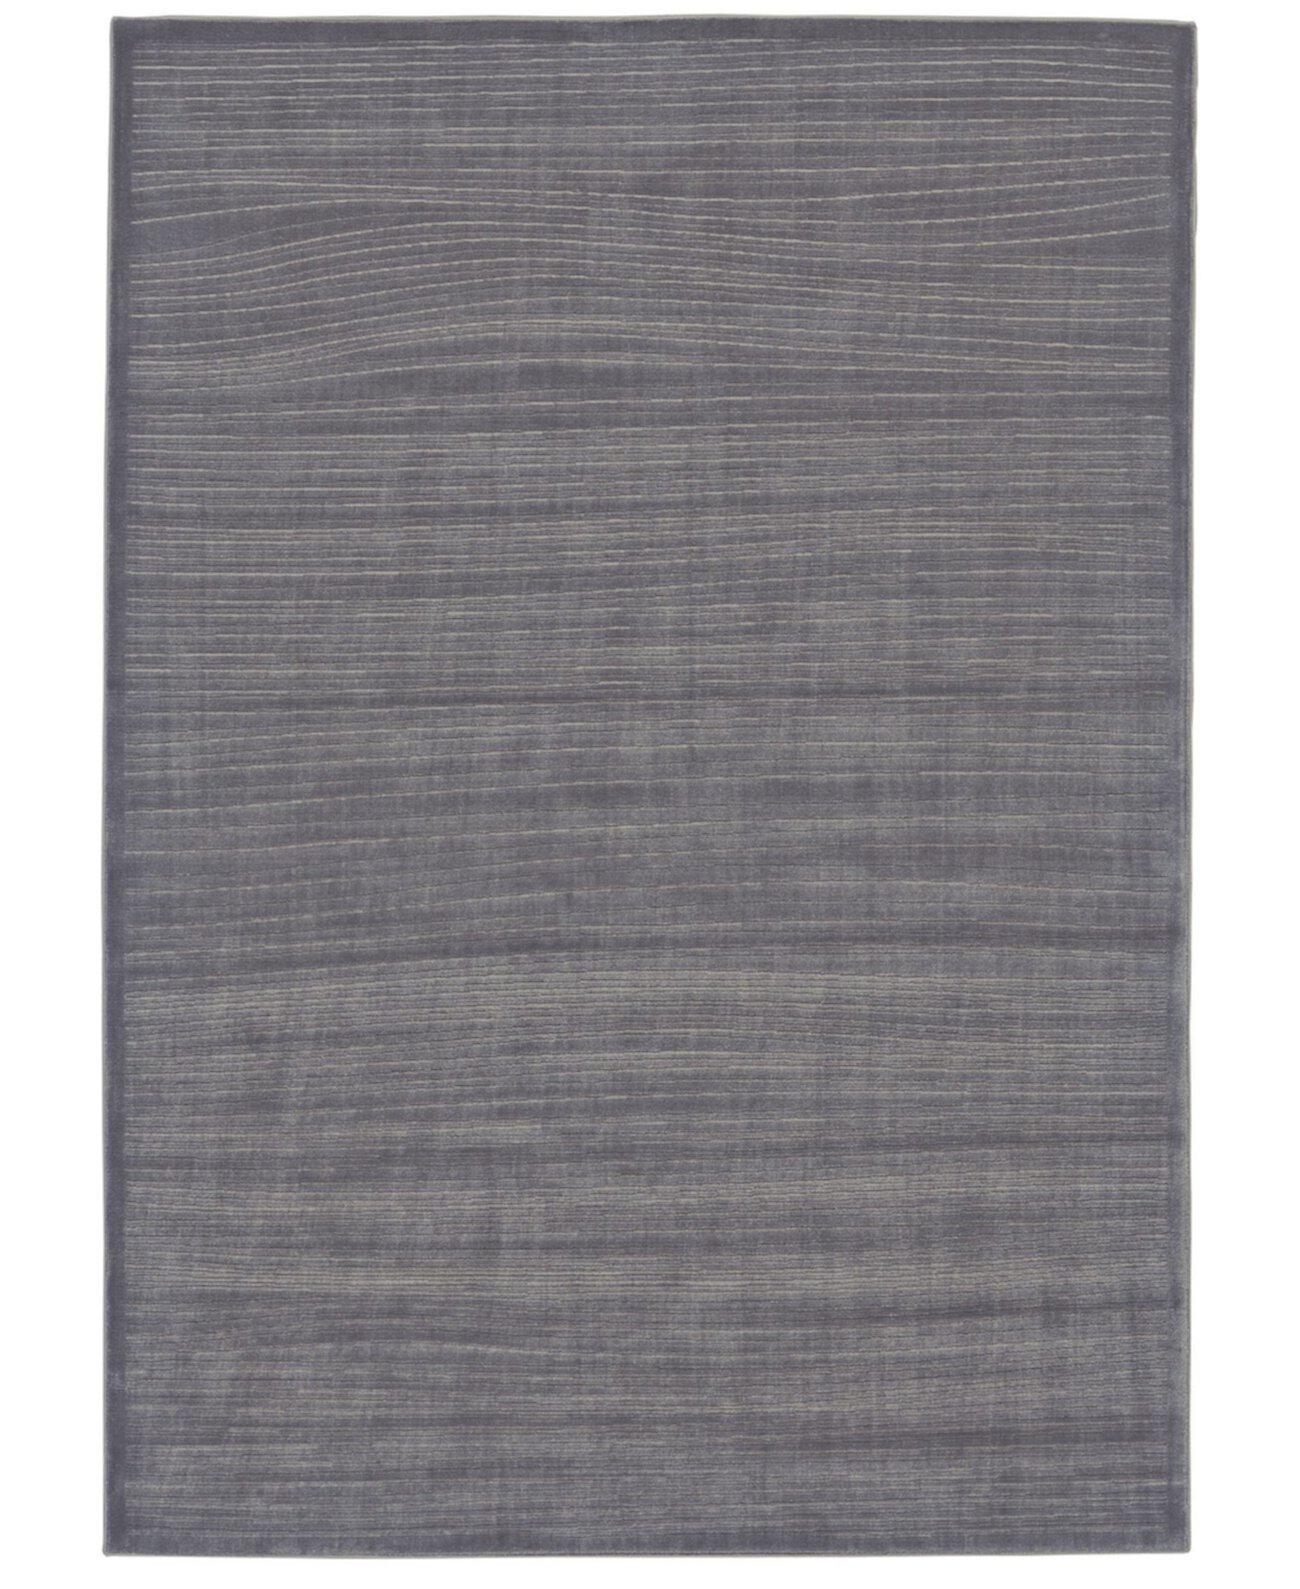 Emilee R3398 Серебряный коврик размером 5 x 8 футов Simply Woven